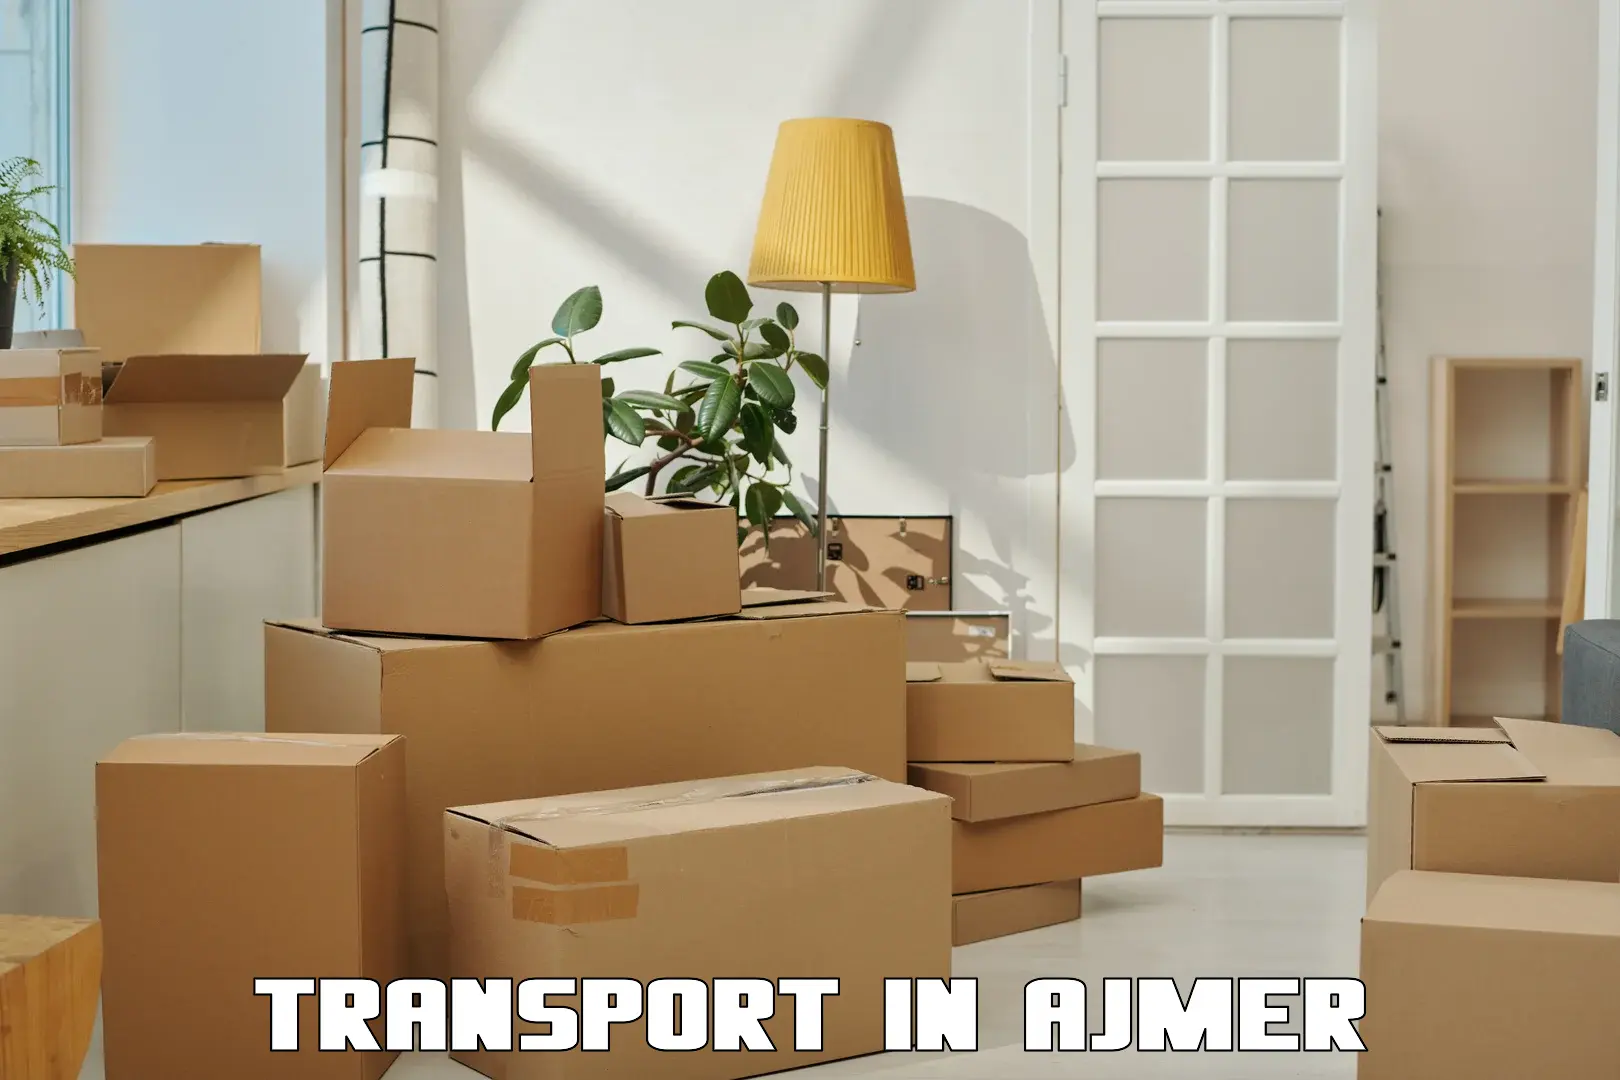 Transport in sharing in Ajmer